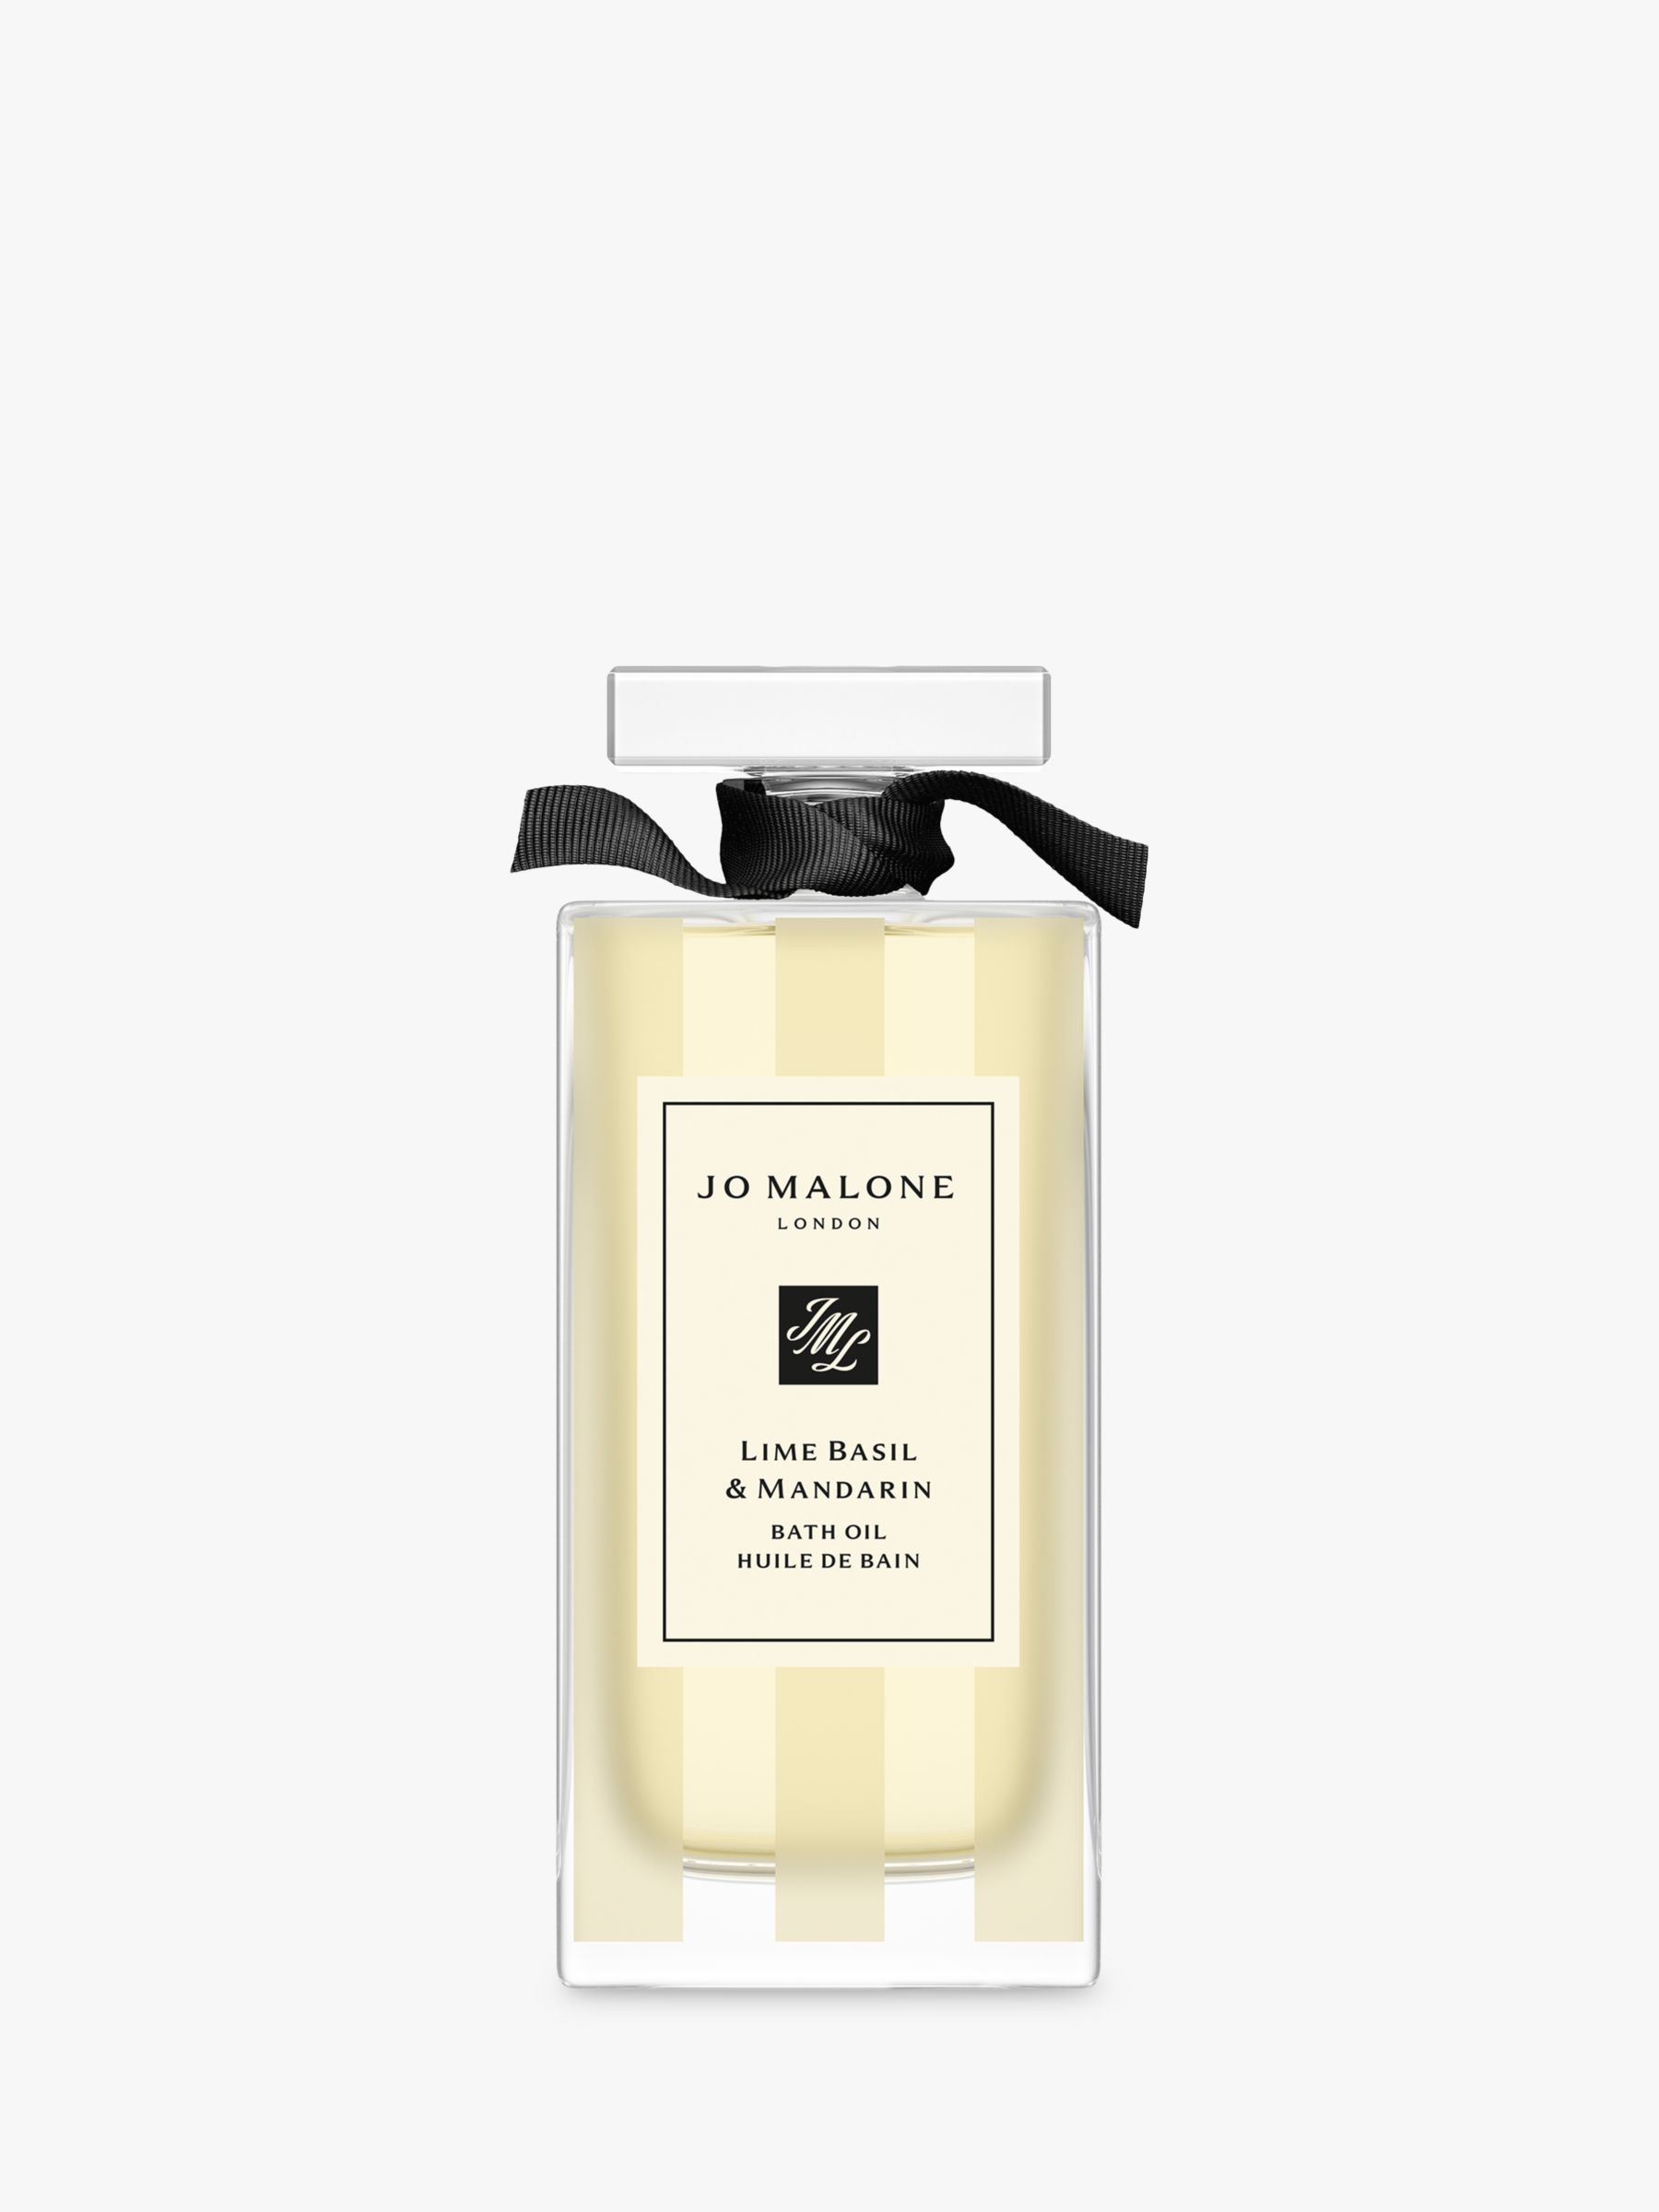 Jo Malone London Lime Basil & Mandarin Bath Oil, 30ml 1